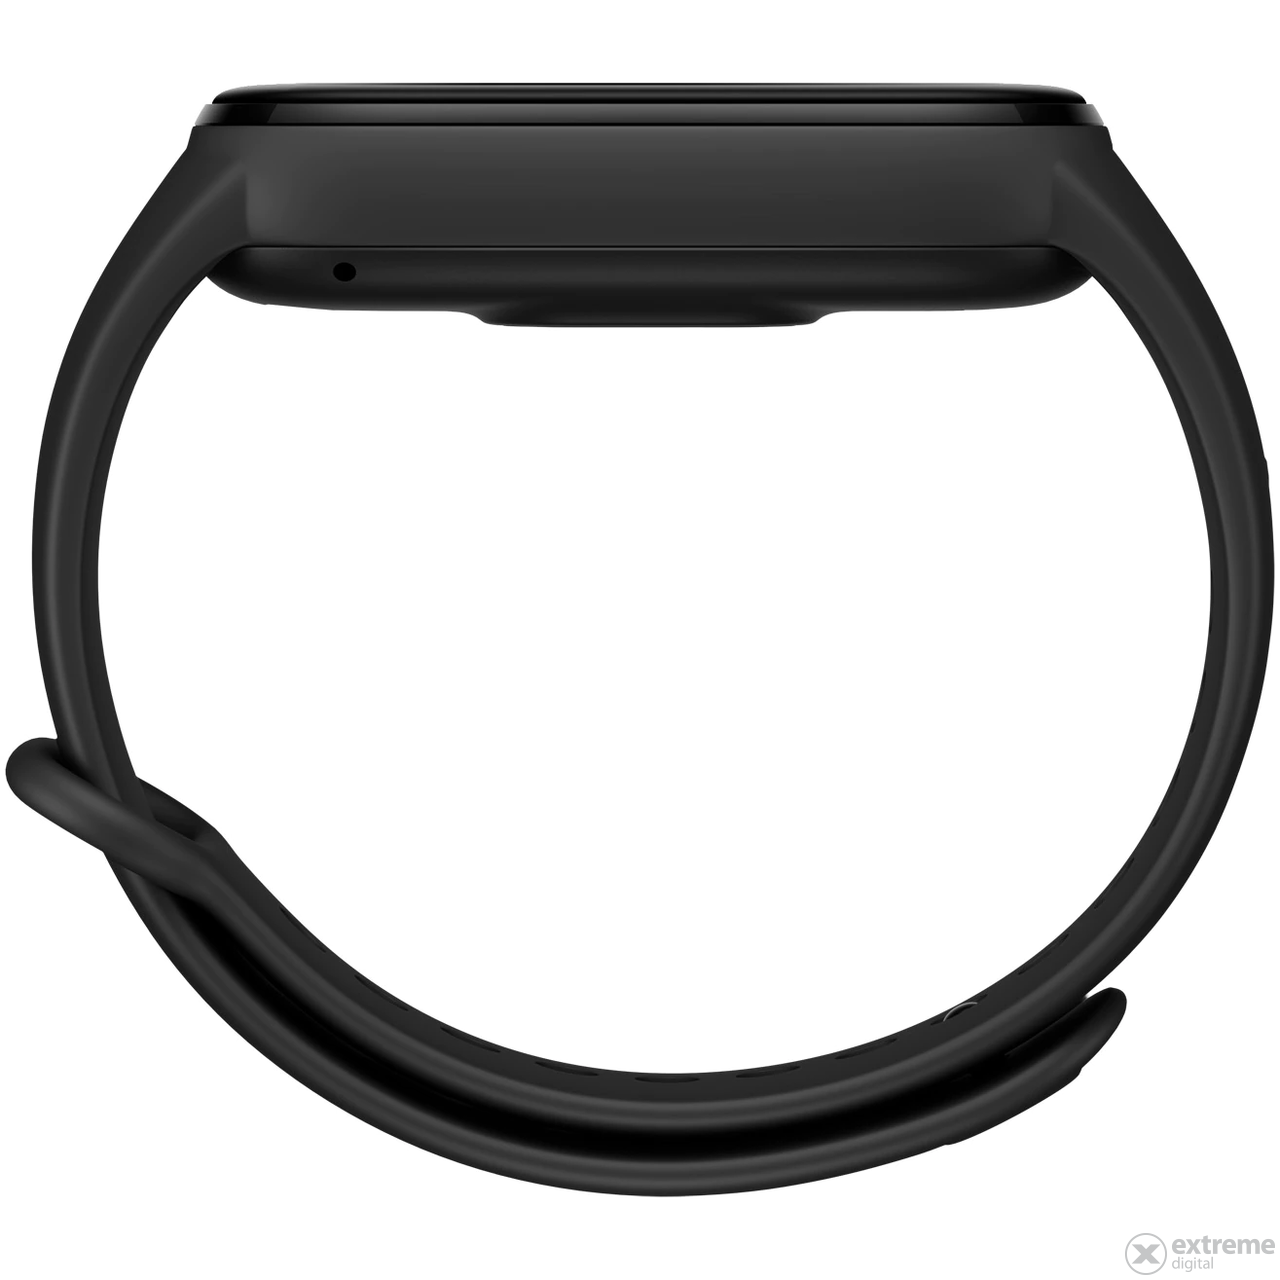 Xiaomi Mi Smart Band 6 pametni sat, crna